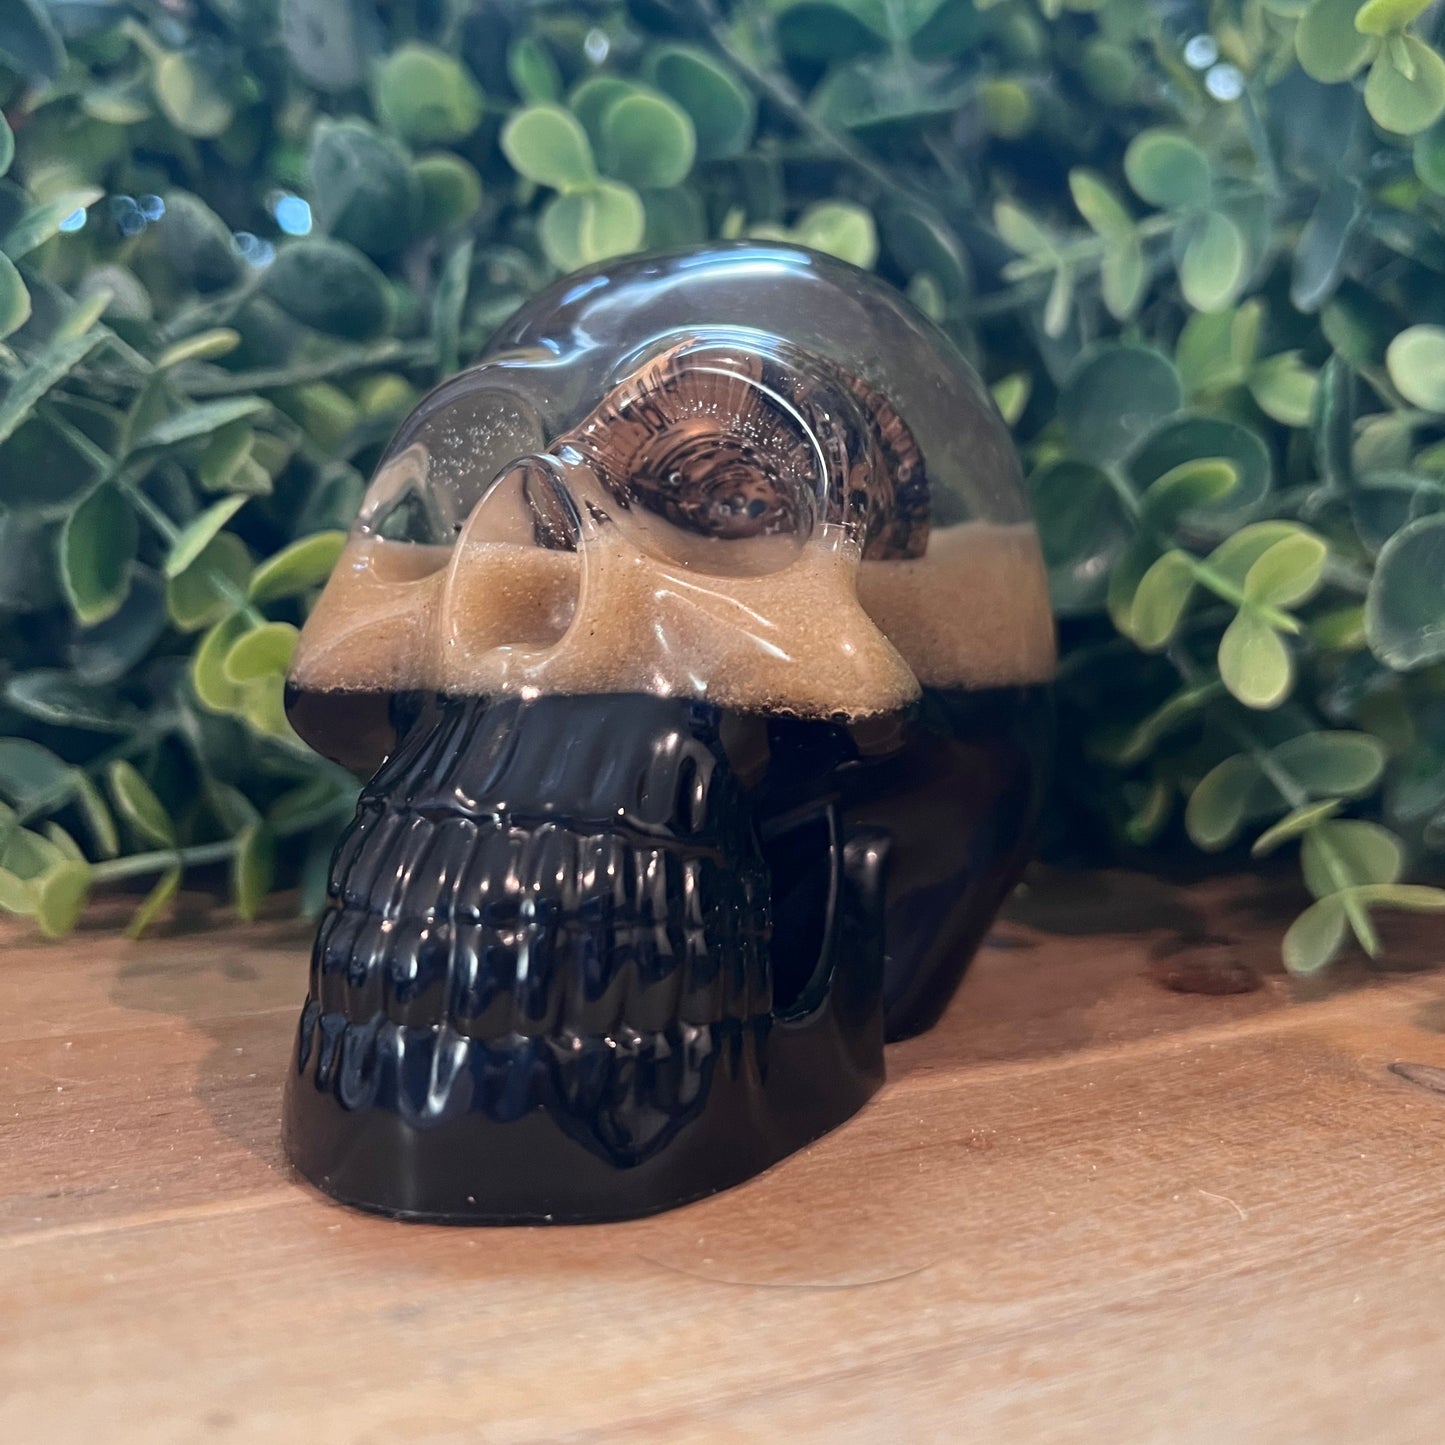 Pirate Themed Skull